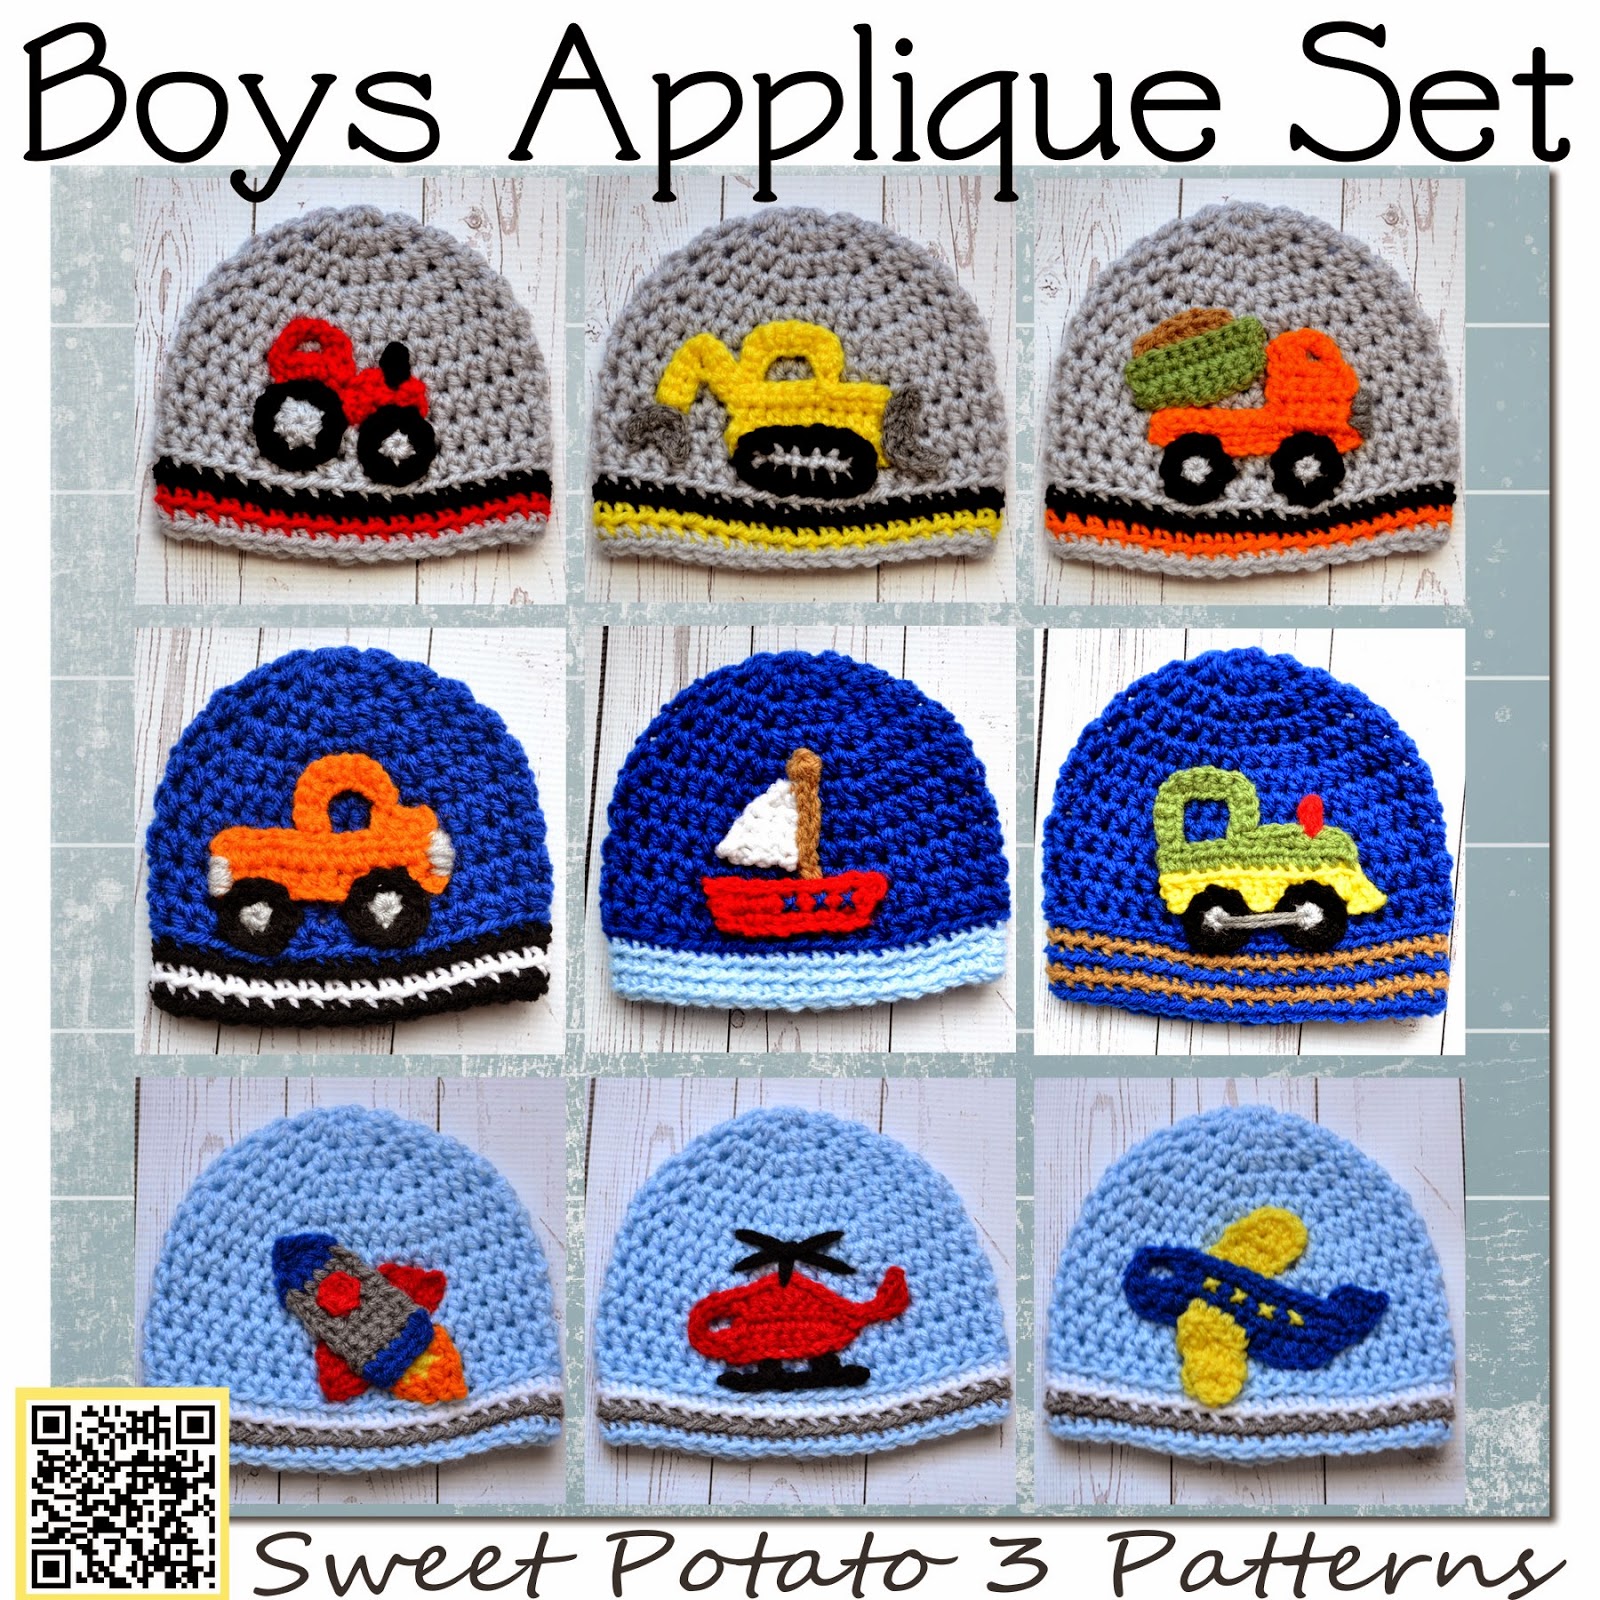 All Boy Applique Crochet Patterns